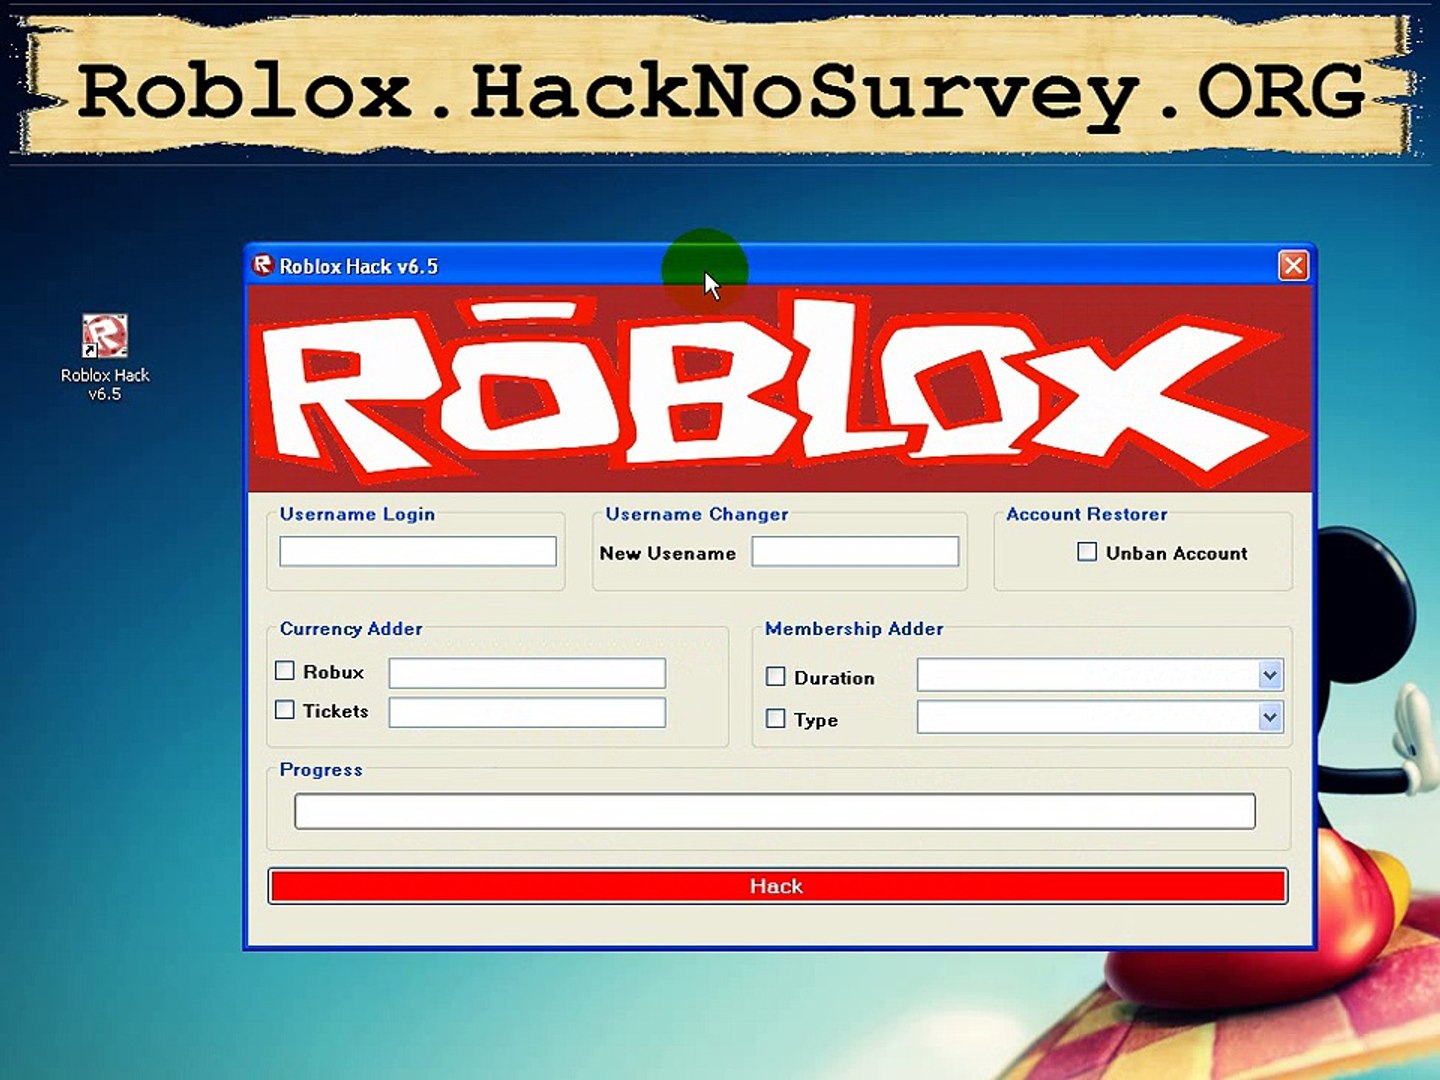 Roblox 2012 Hackers